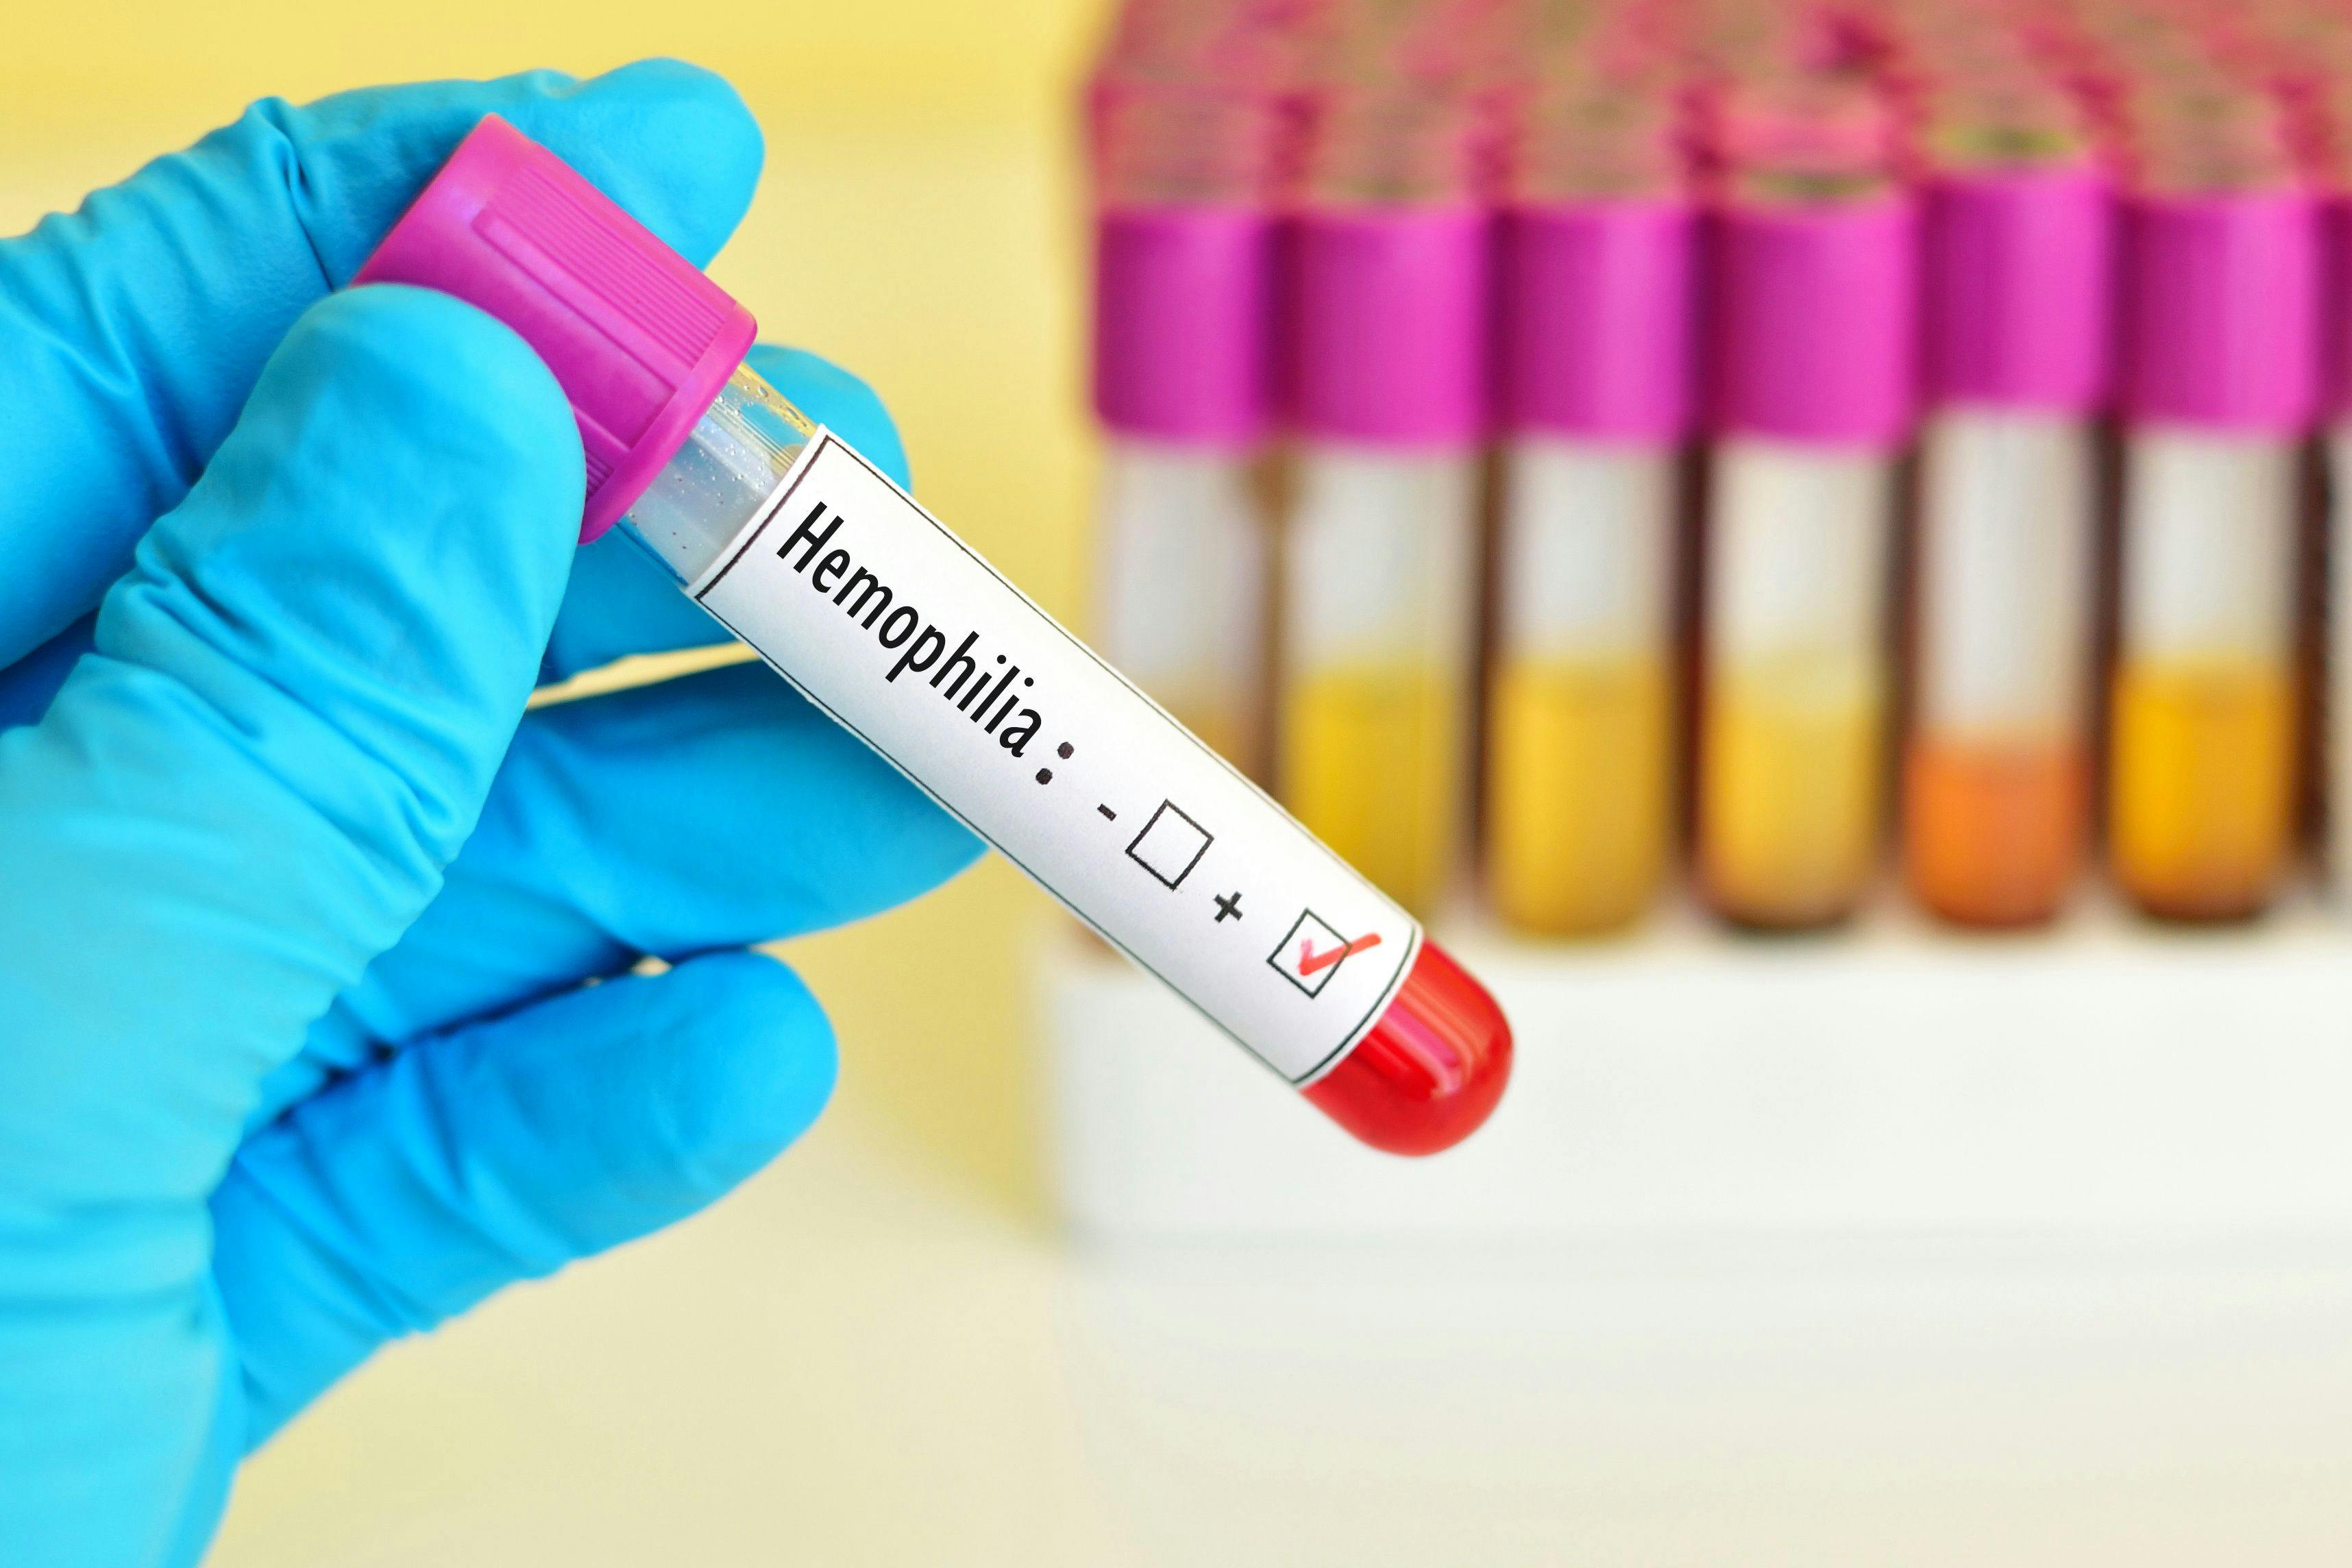 Blood sample positive for hemophilia -- Image credit: jarun011 | stock.adobe.com